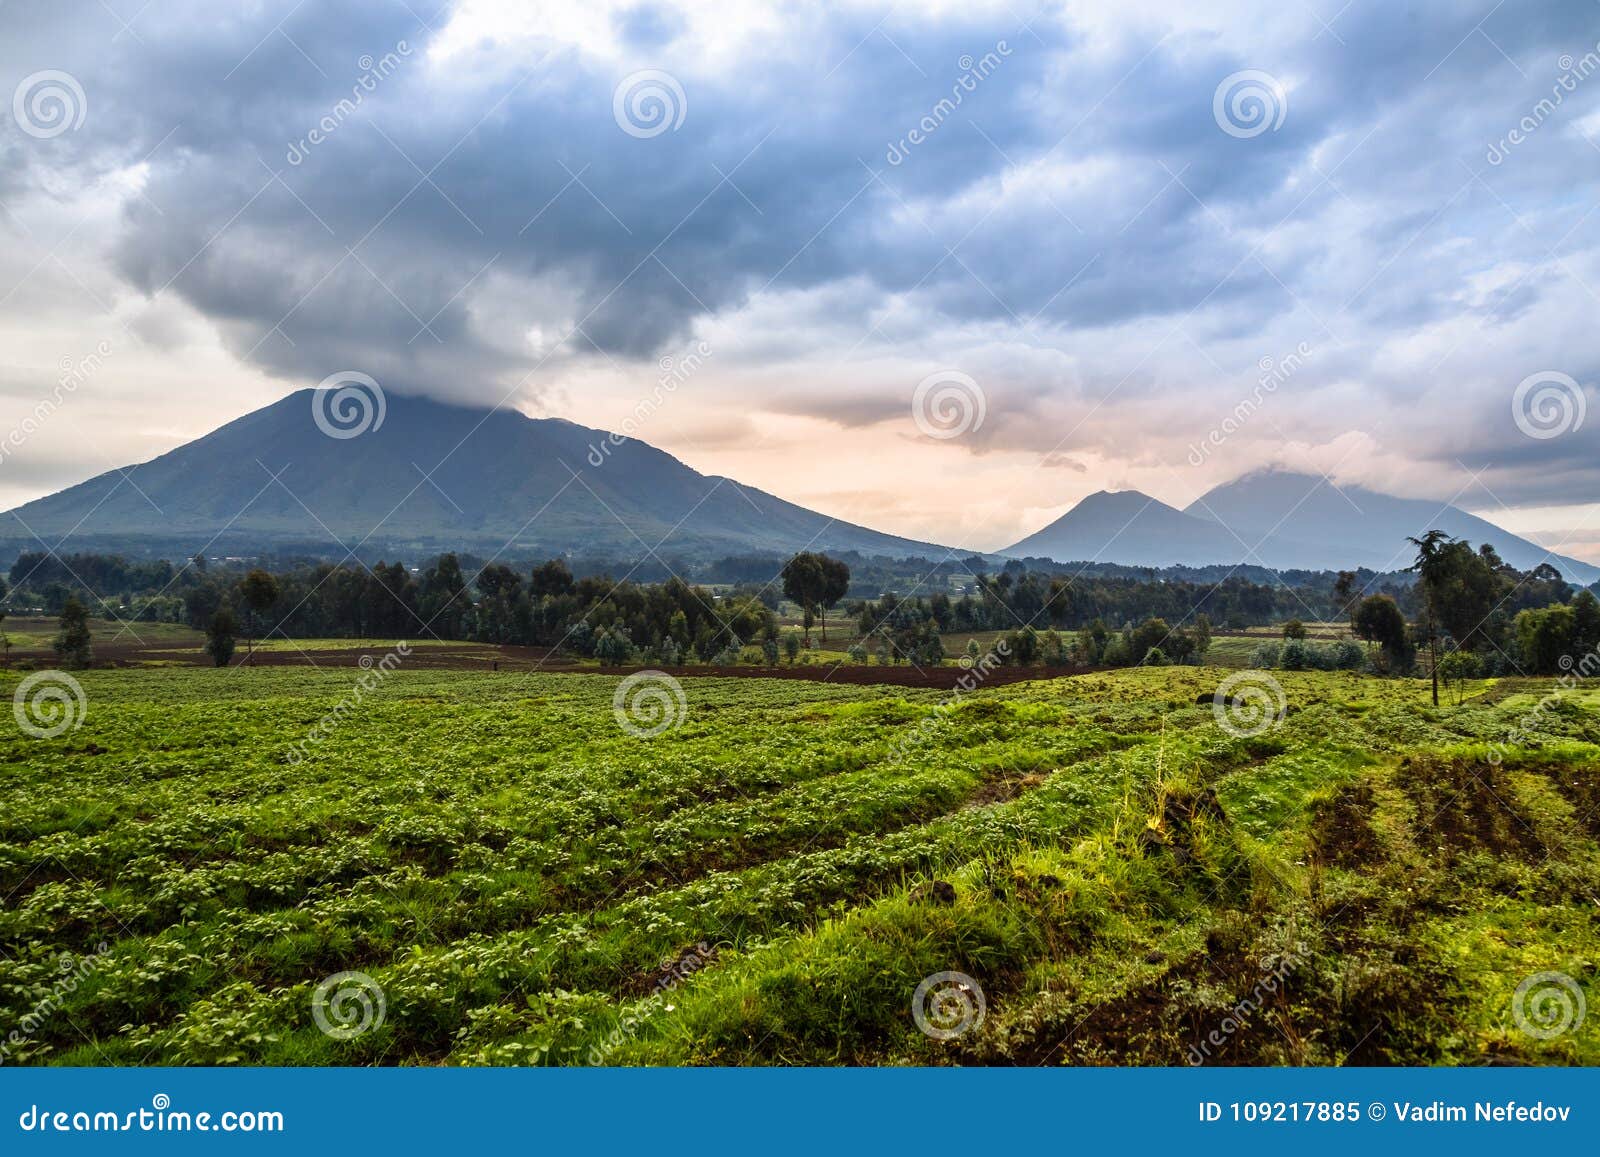 virunga volcano national park landscape with green farmland fields in the foreground, rwanda